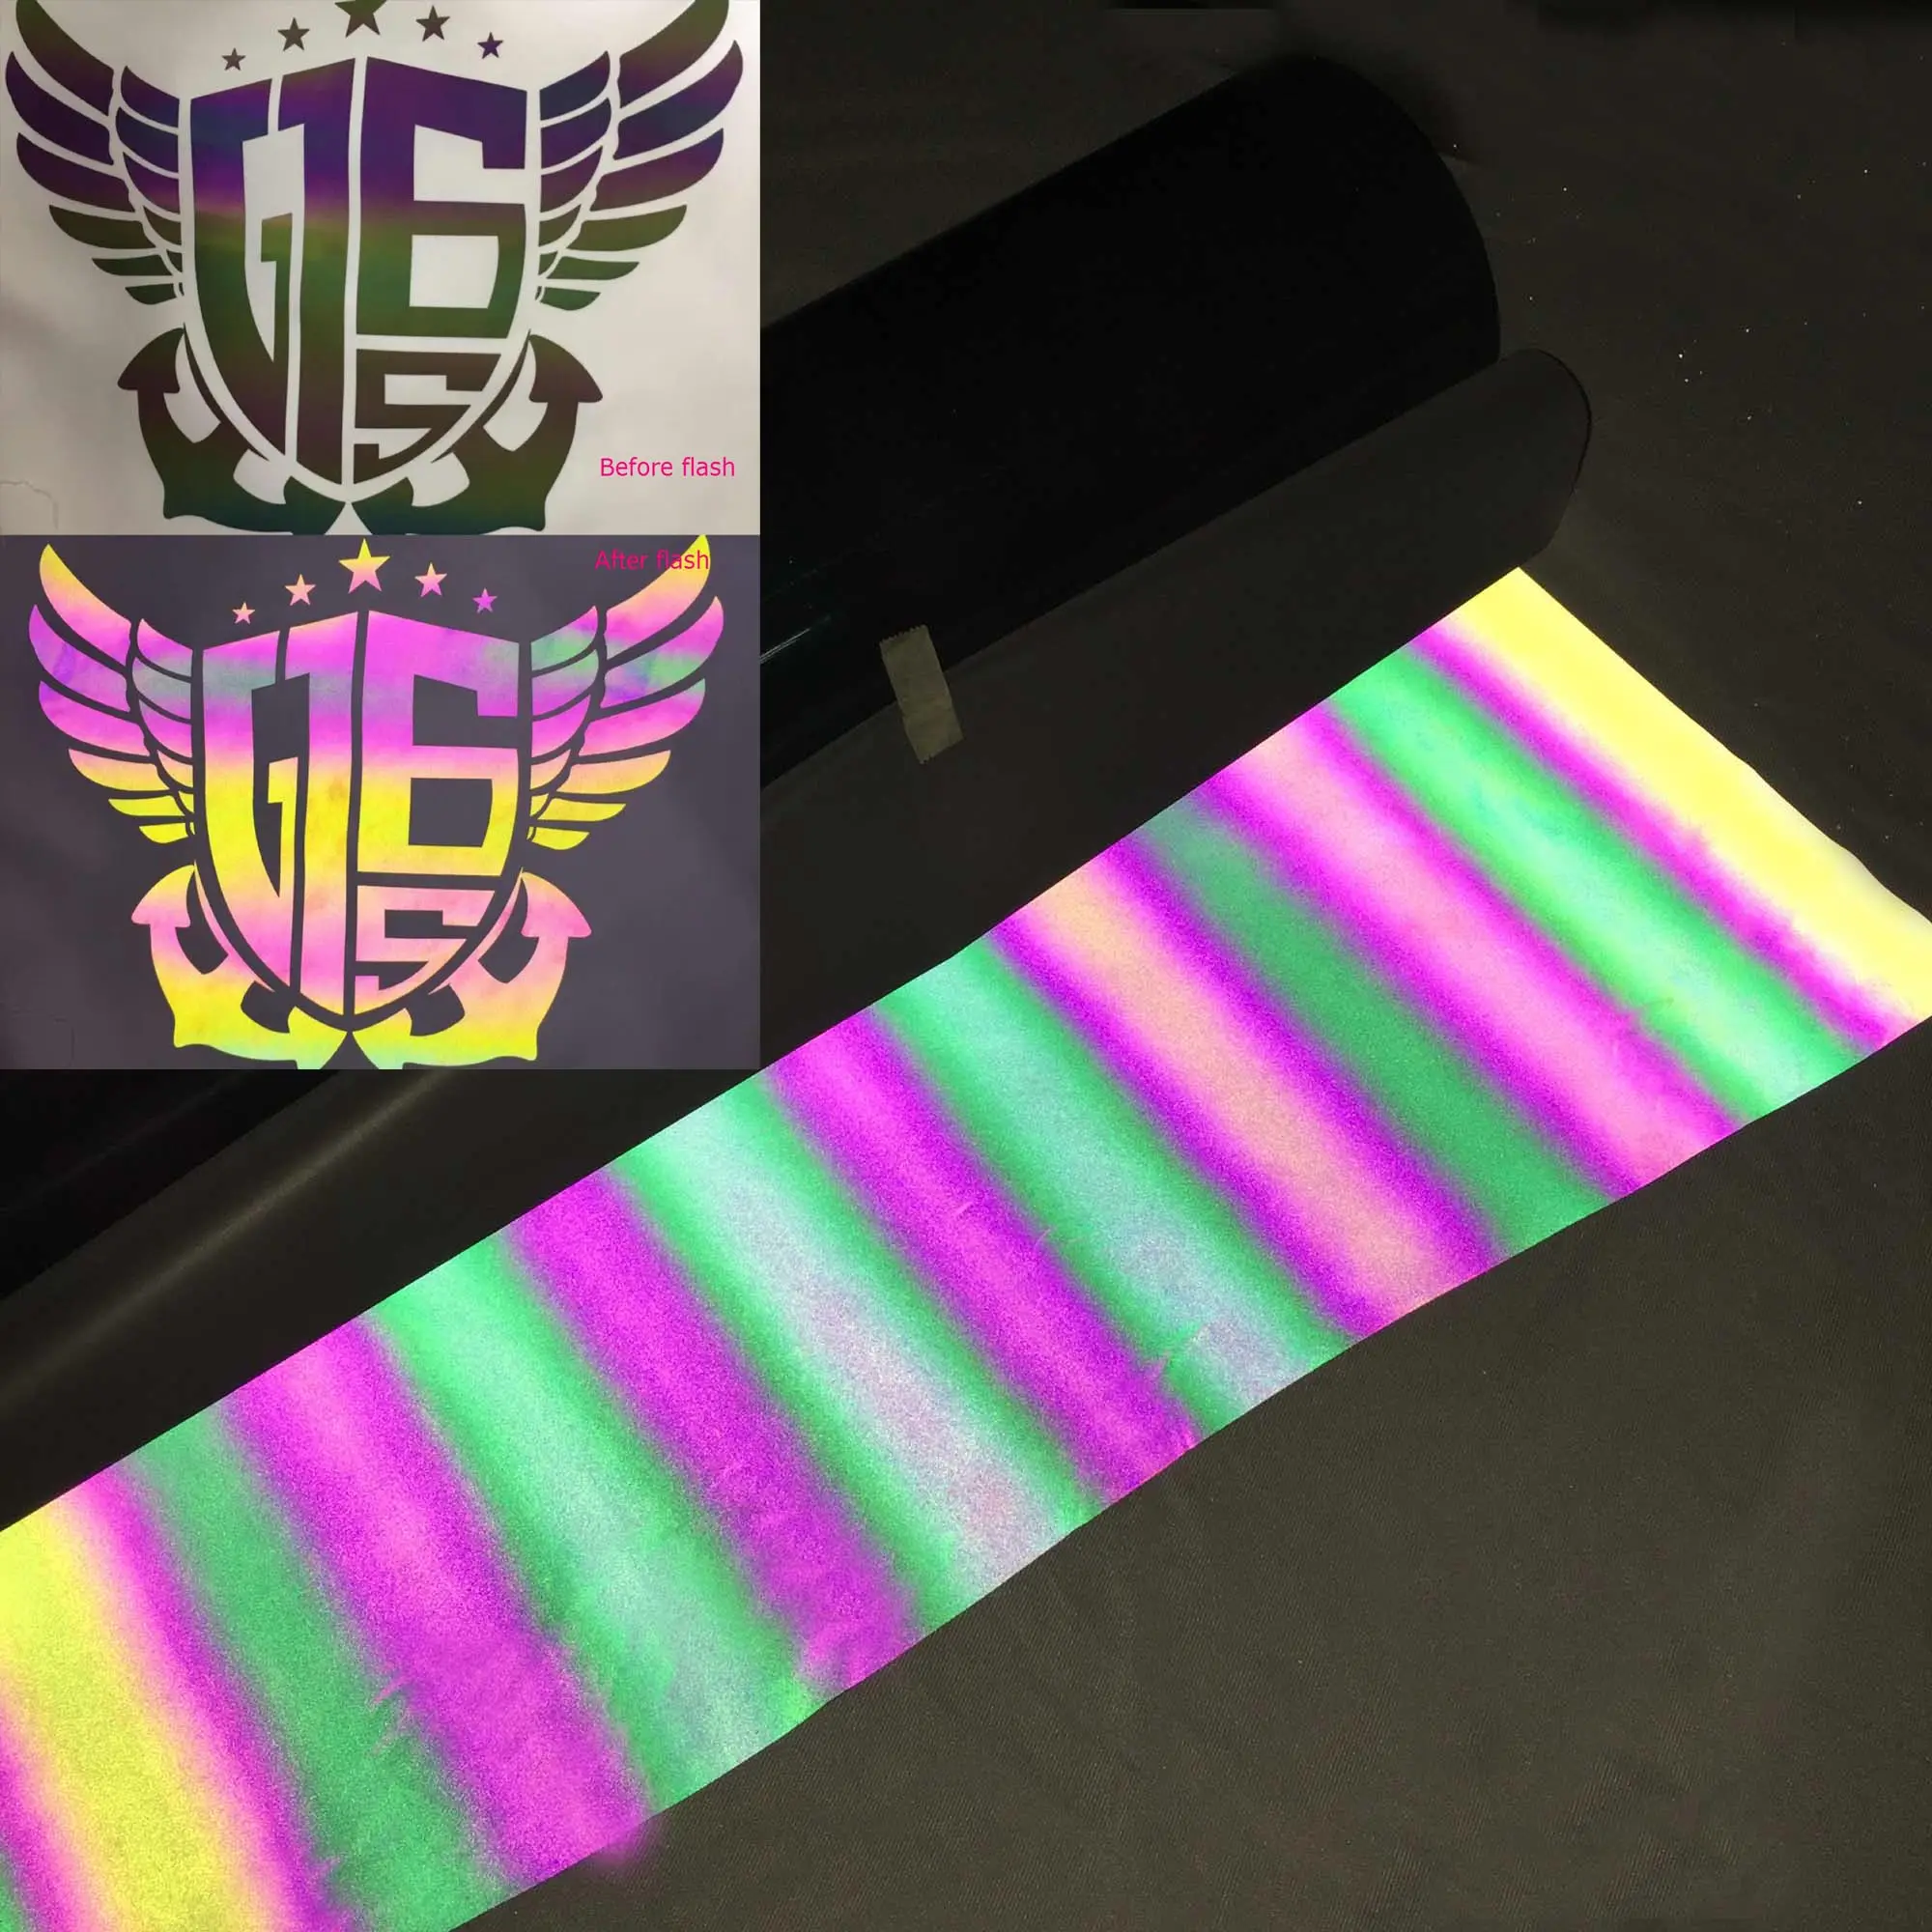 Rollos de tela textil htv, vinilo de transferencia térmica reflectante de Arco Iris para camisetas y ropa